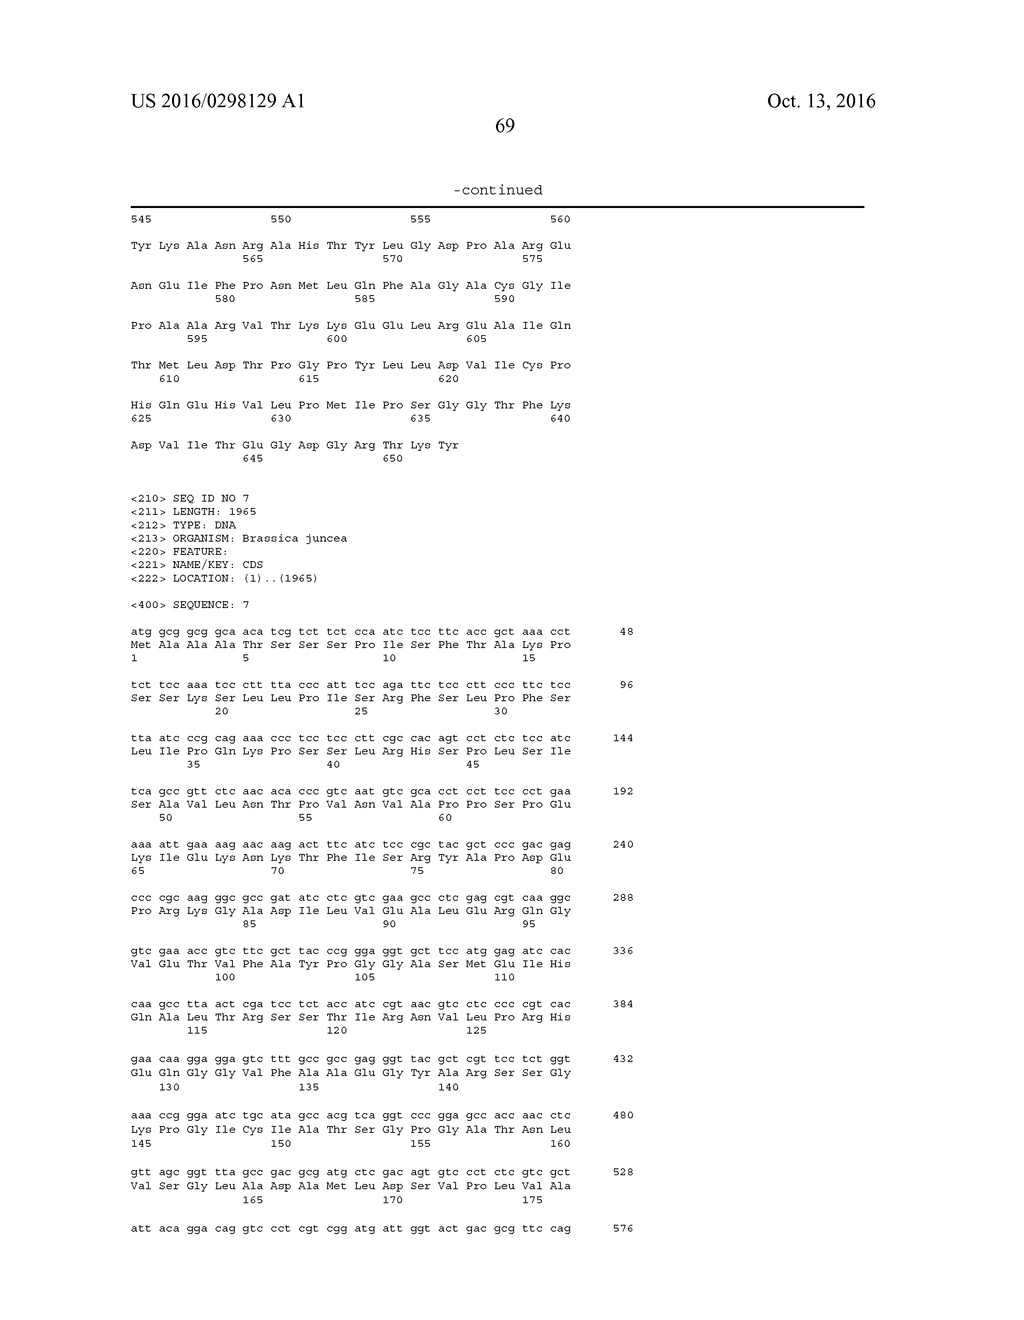 ALS INHIBITOR HERBICIDE TOLERANT MUTANT PLANTS - diagram, schematic, and image 78